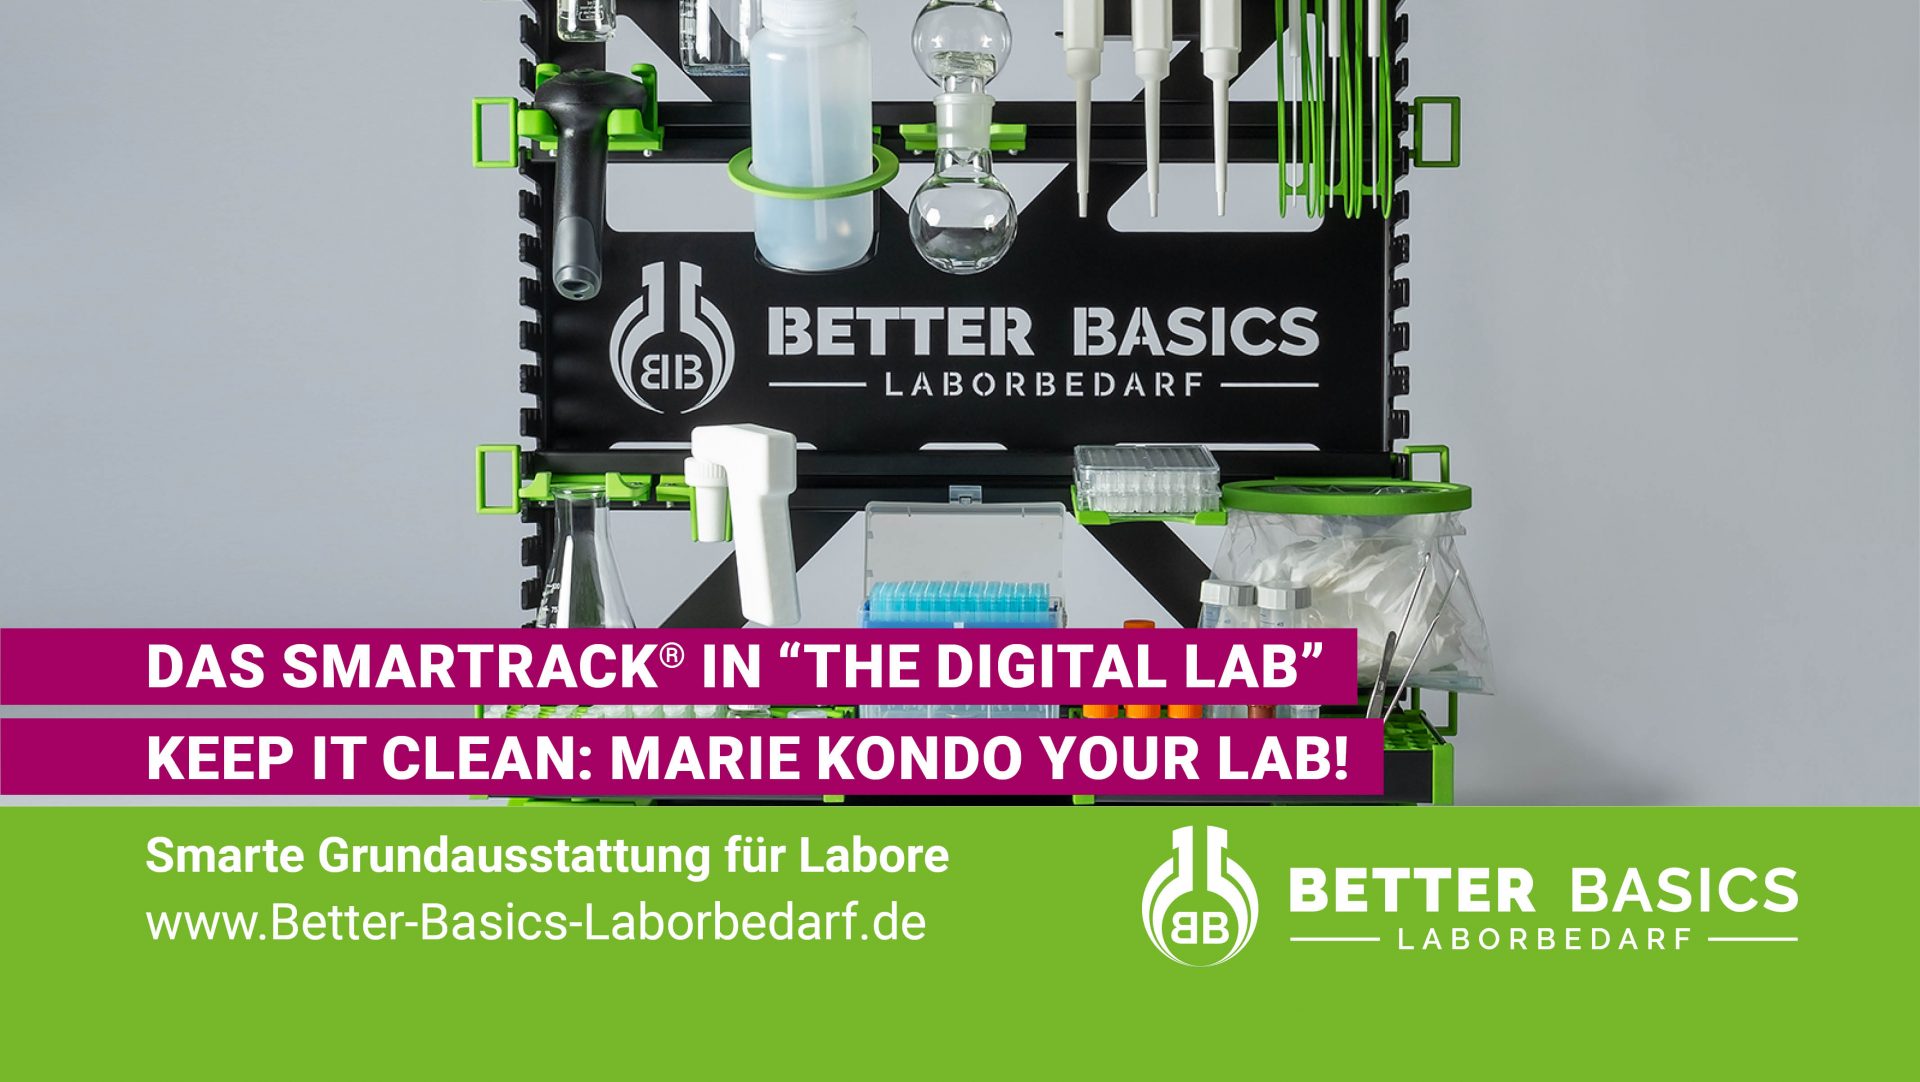 Das SmartRack® in “THE DIGITAL LAB” Keep it clean: Marie Kondo your lab!